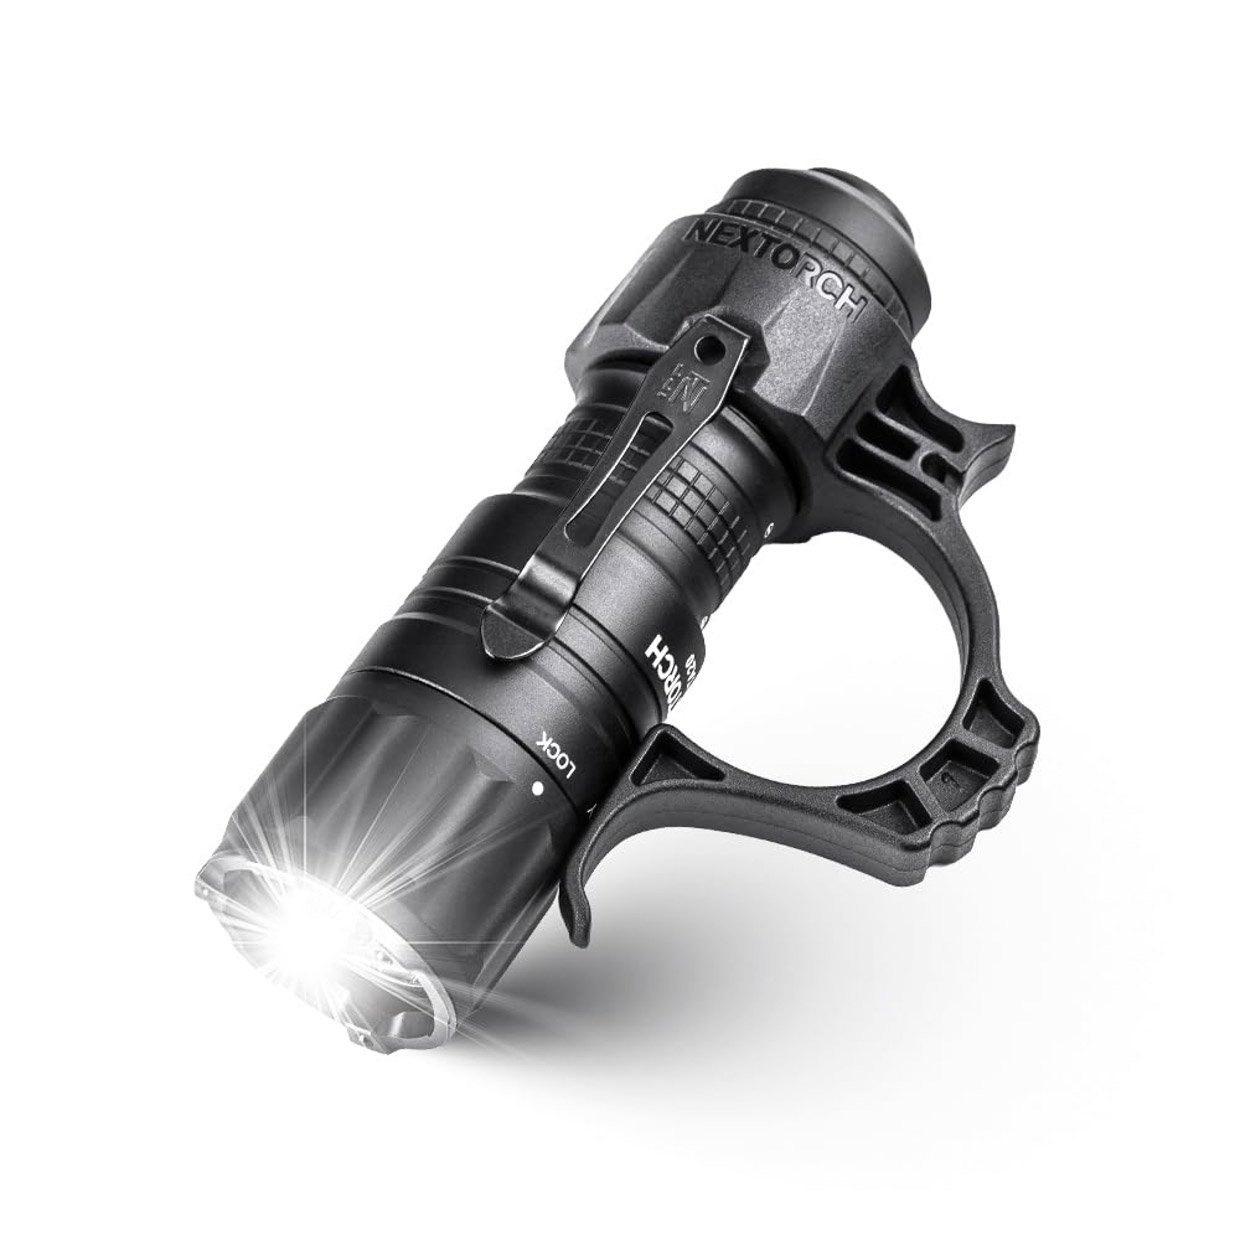 Nextorch TA20 Tactical Flashlight Has a Pistol Grip Option